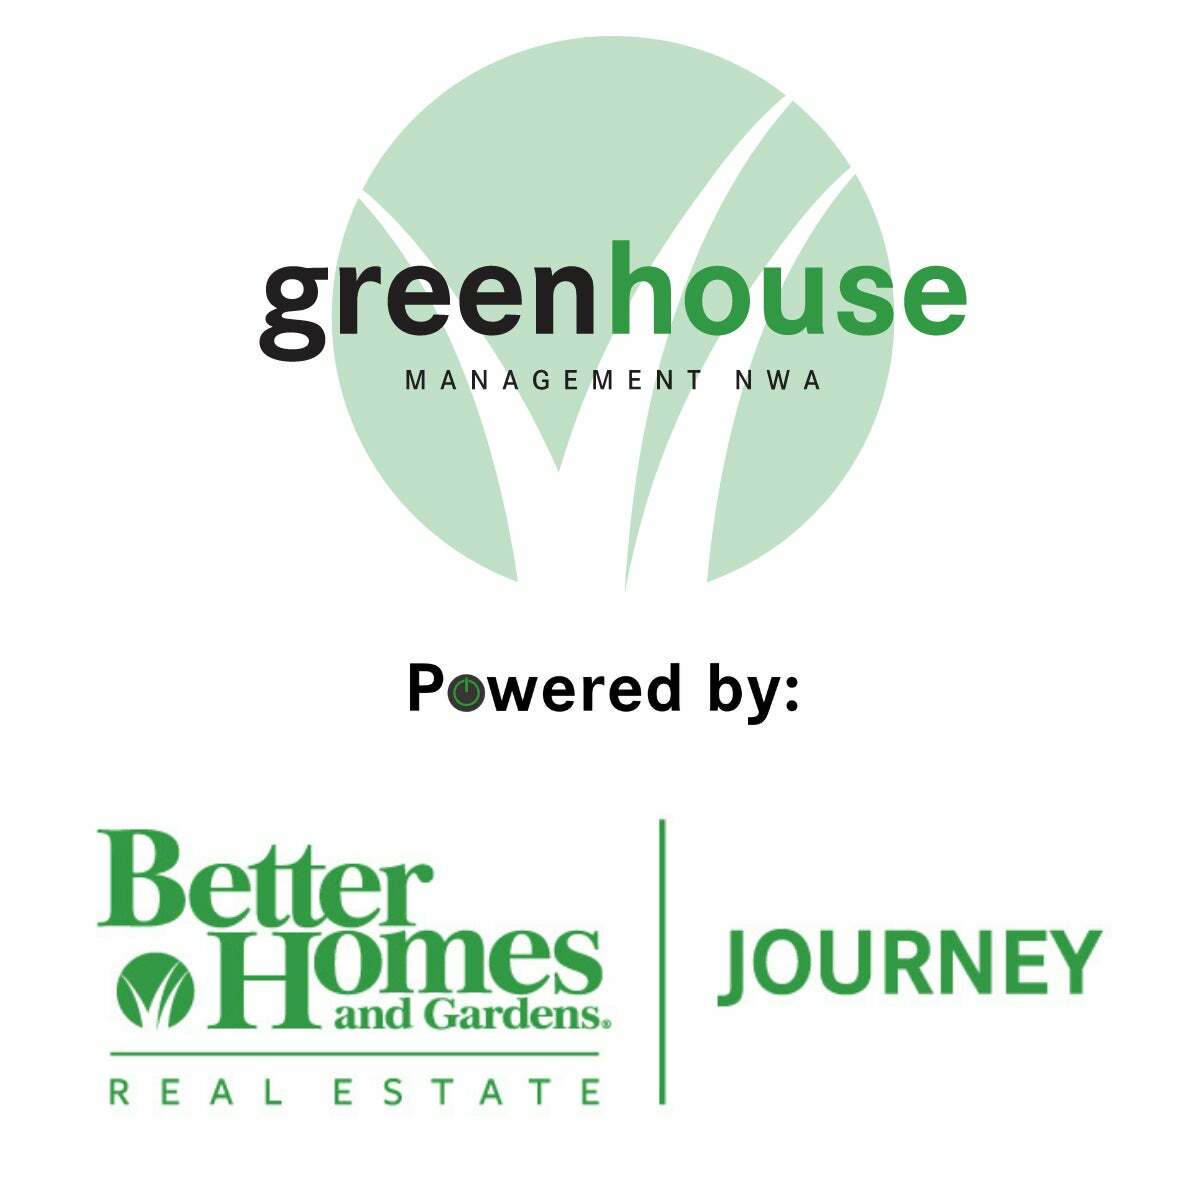 Greenhouse Management NWA, Real Estate Salesperson in Bentonville, Journey